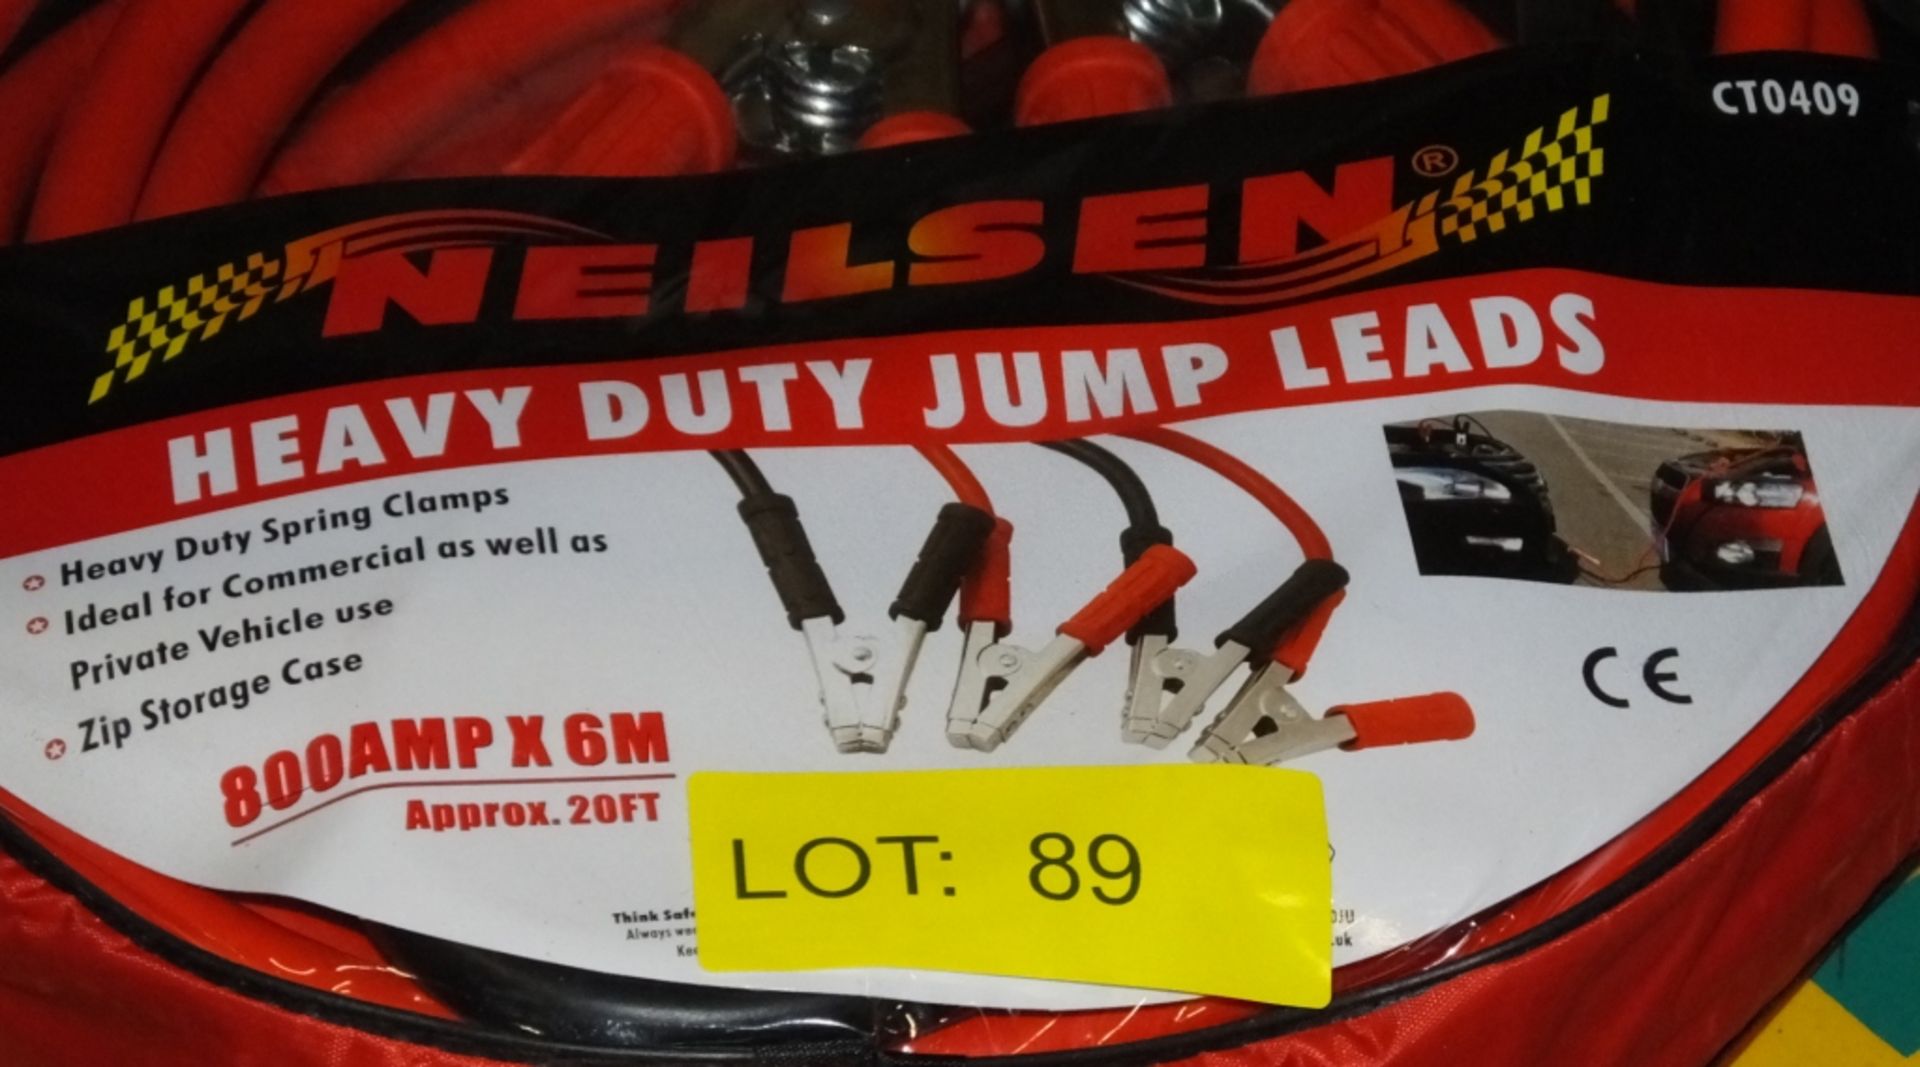 Neilsen Heavy Duty Jump Leads 800 amp x 6M - Image 2 of 2